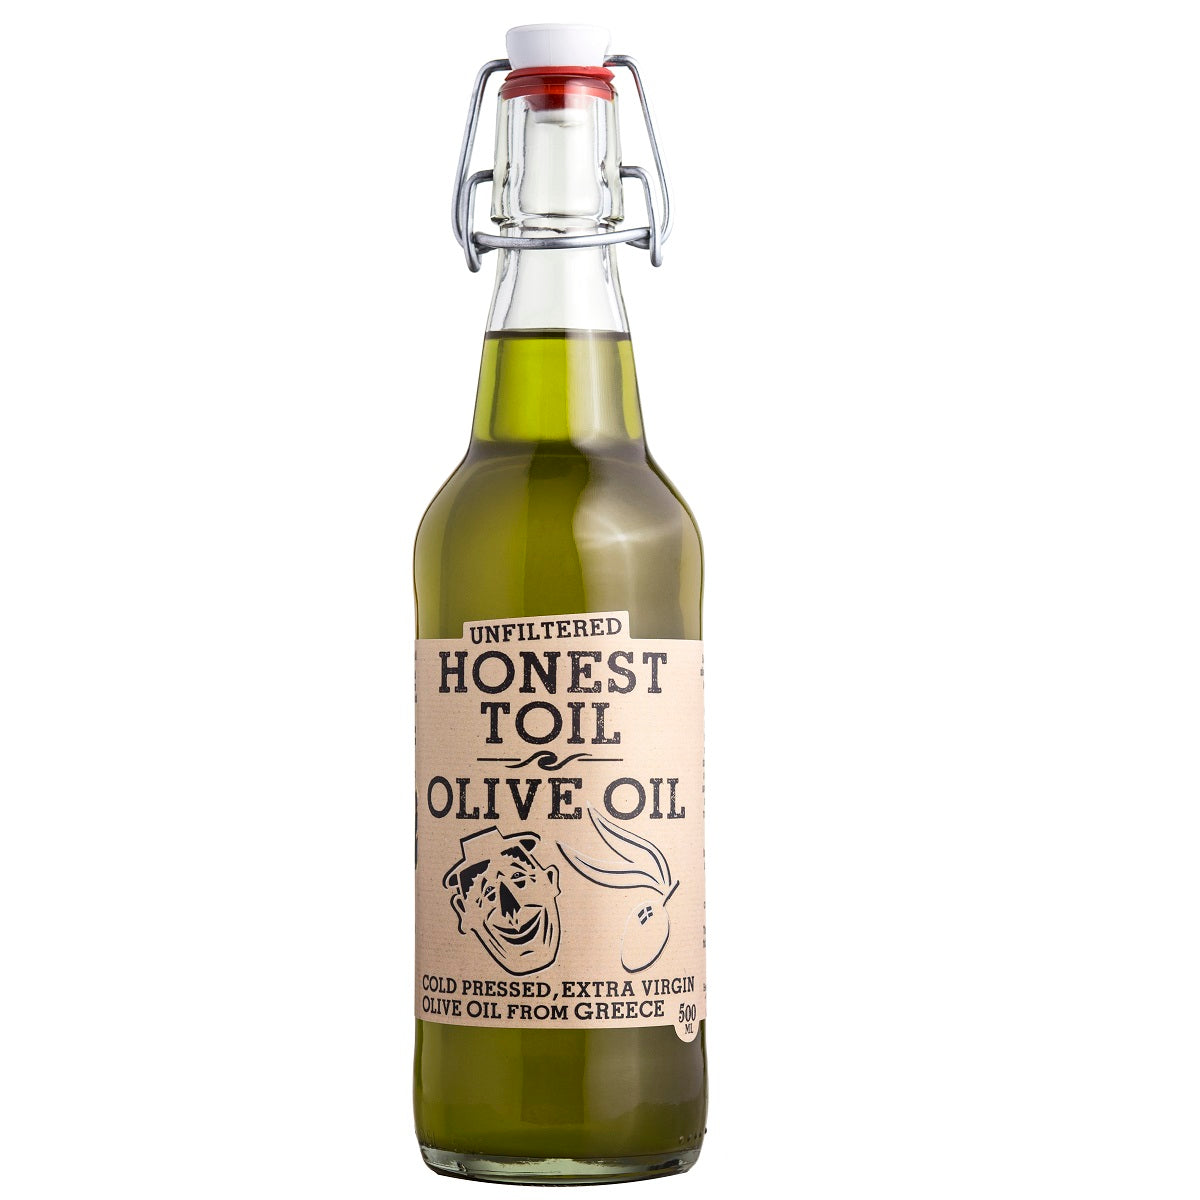 Honest Toil Cold Pressed, Extra Virgin Olive Oil 500ml